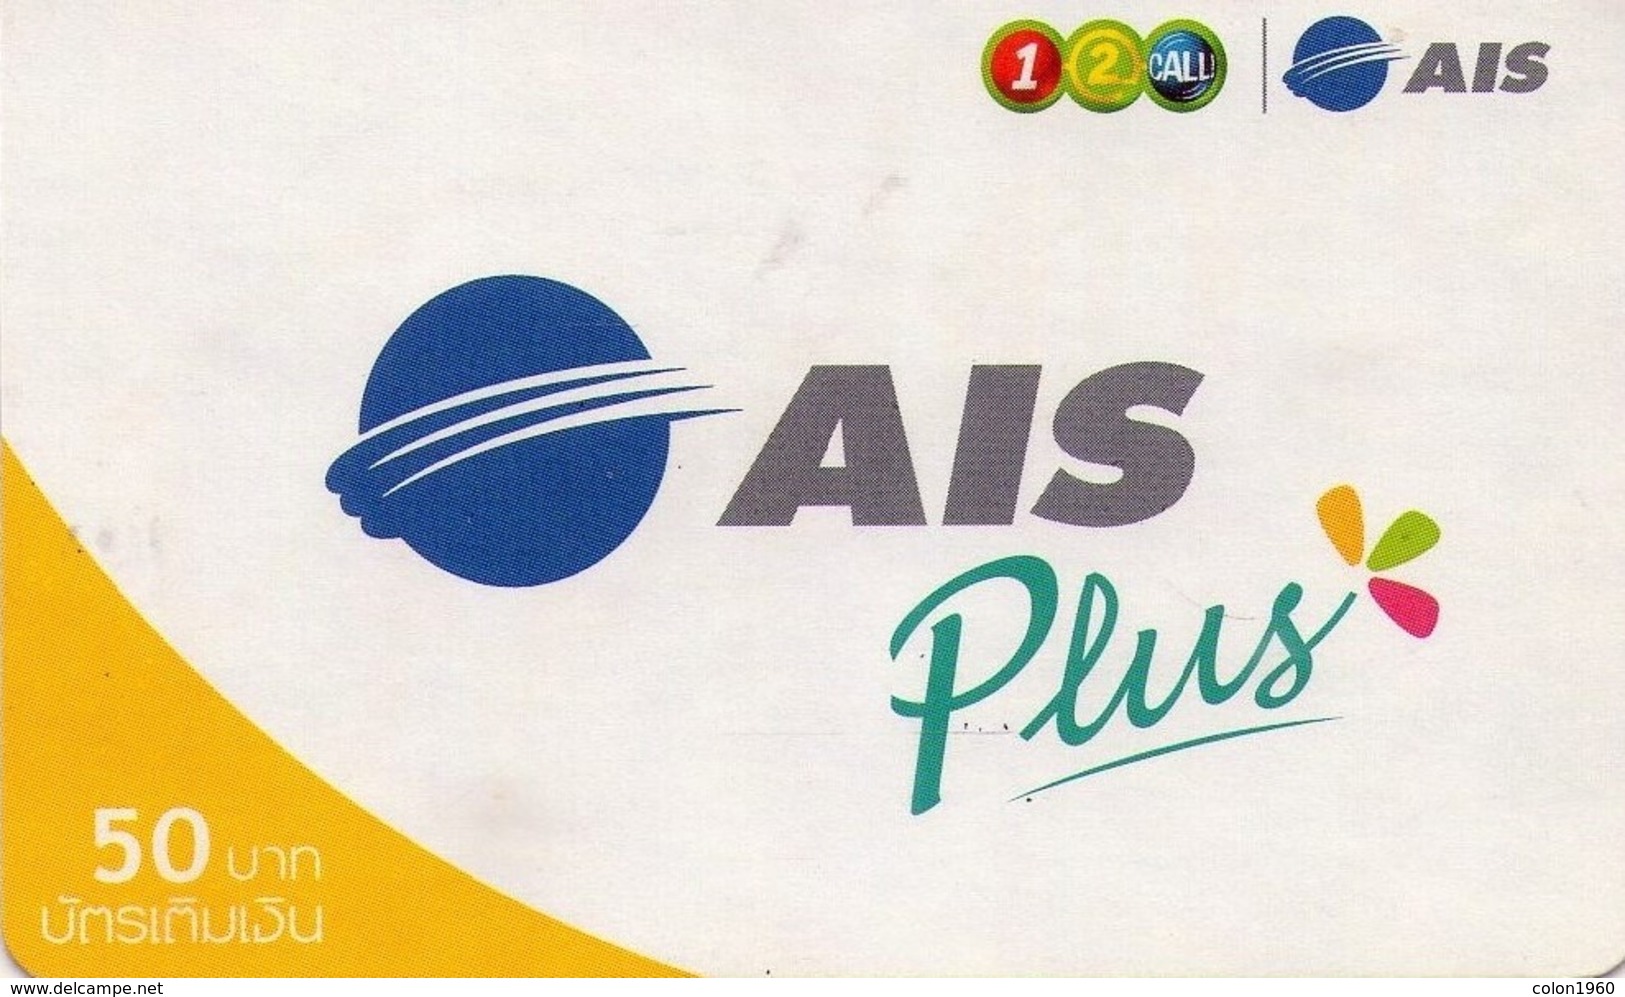 TAILANDIA. AIS Plus-01. 50 ฿. 12/2007. TH-12Call-1109 B. (033) - Tailandia